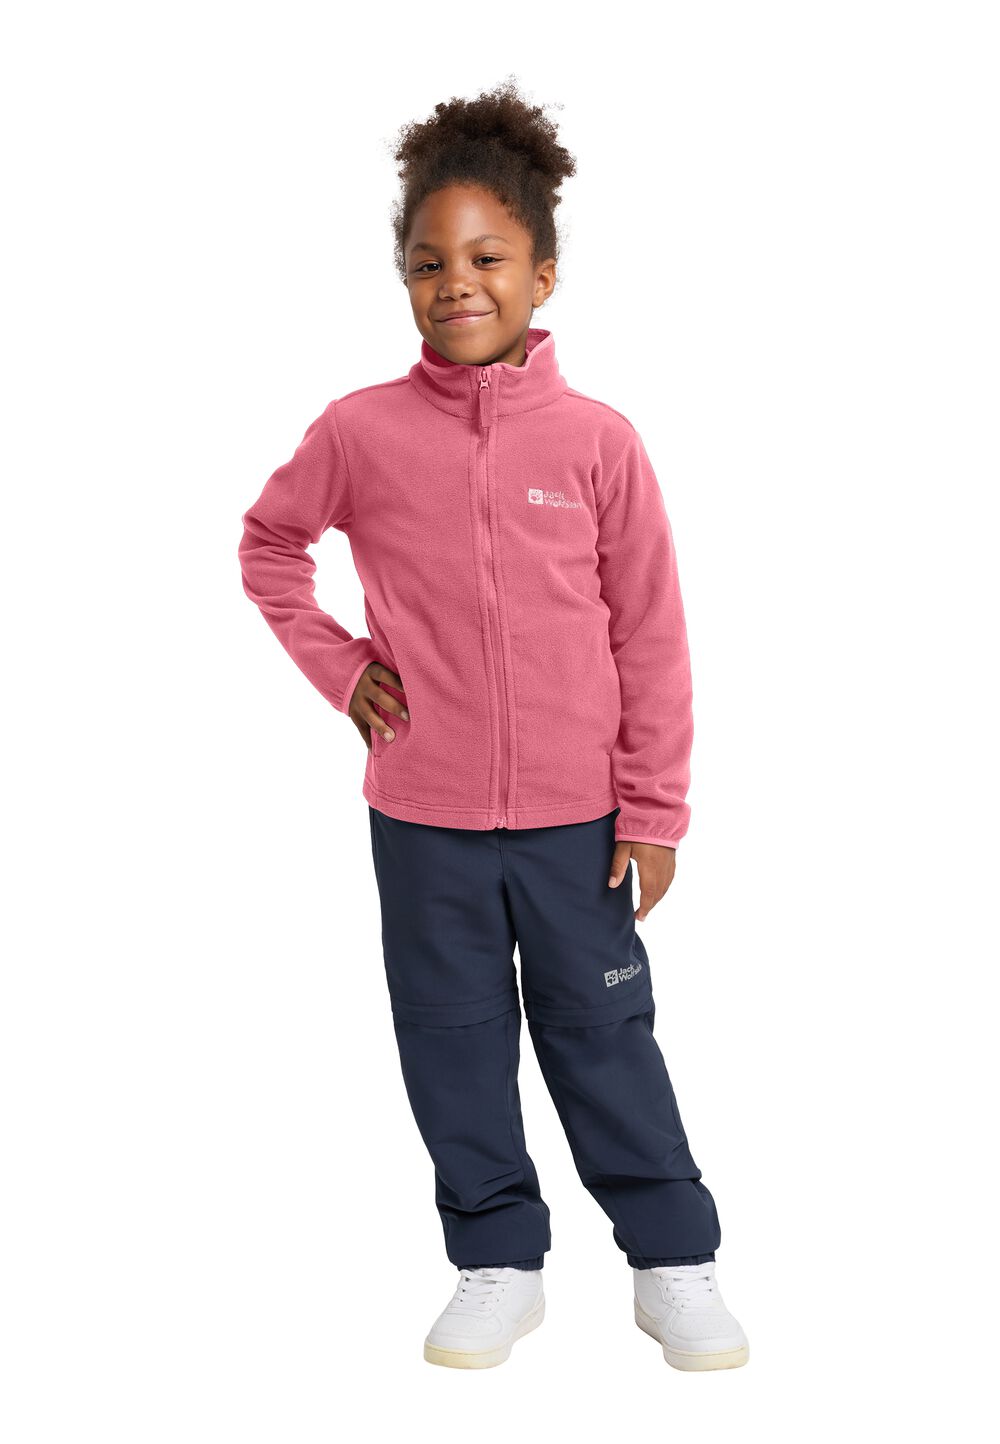 Jack Wolfskin Taunus Jacket Kids Fleece jack Kinderen 152 soft pink soft pink